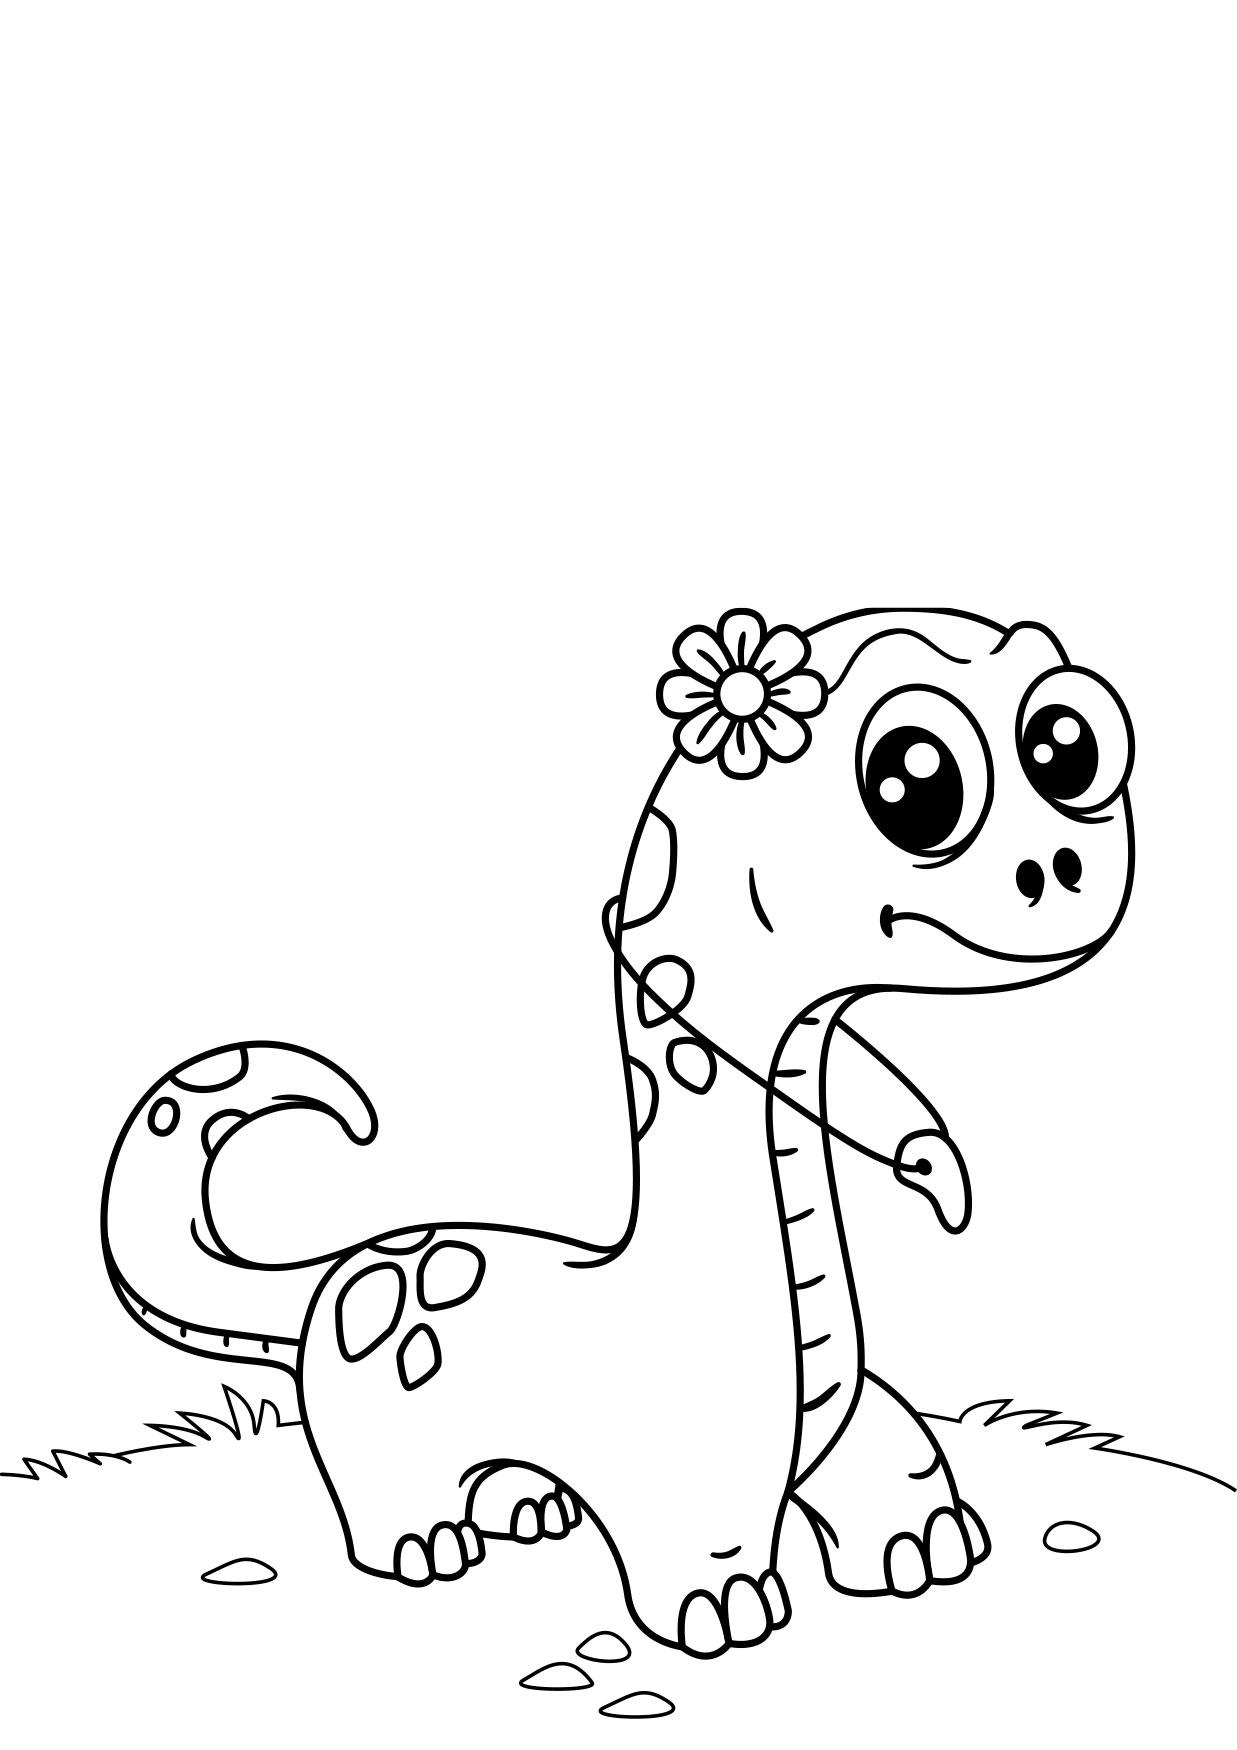 Dibujo para colorear dinosaurio con flor